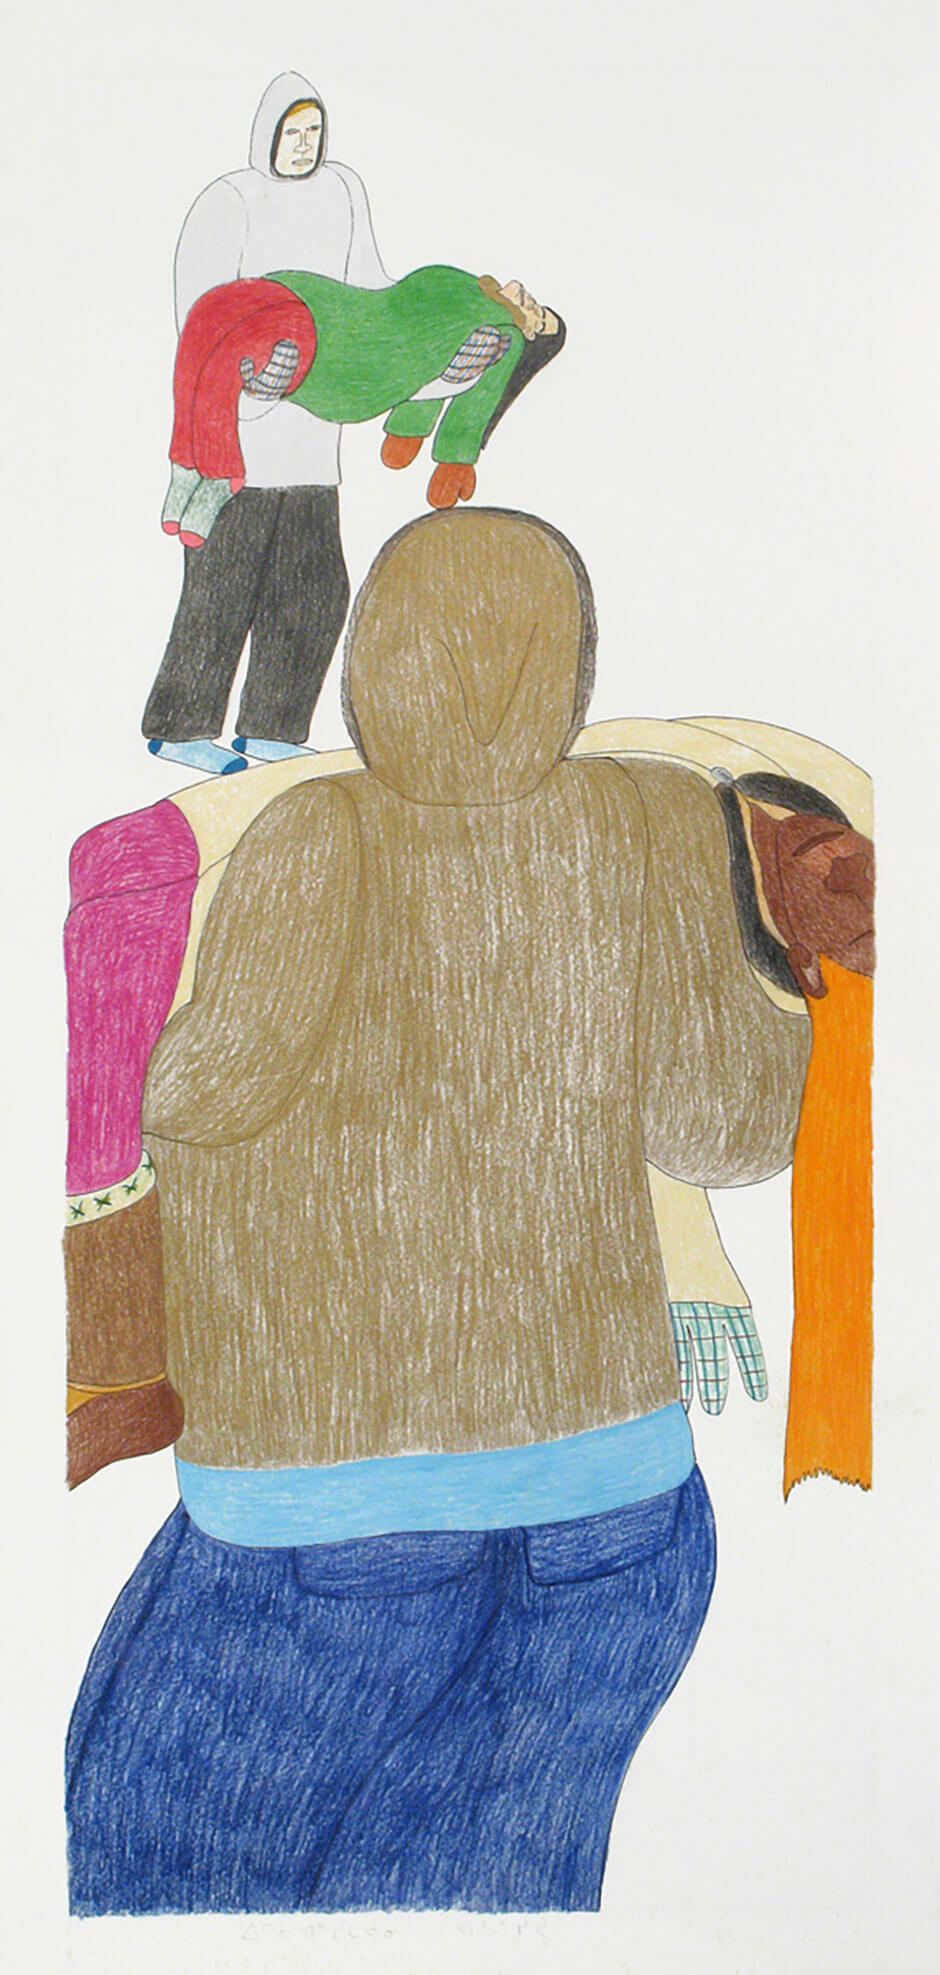 Art Canada Institute, Shuvinai Ashoona, Carrying Suicidal People, 2011